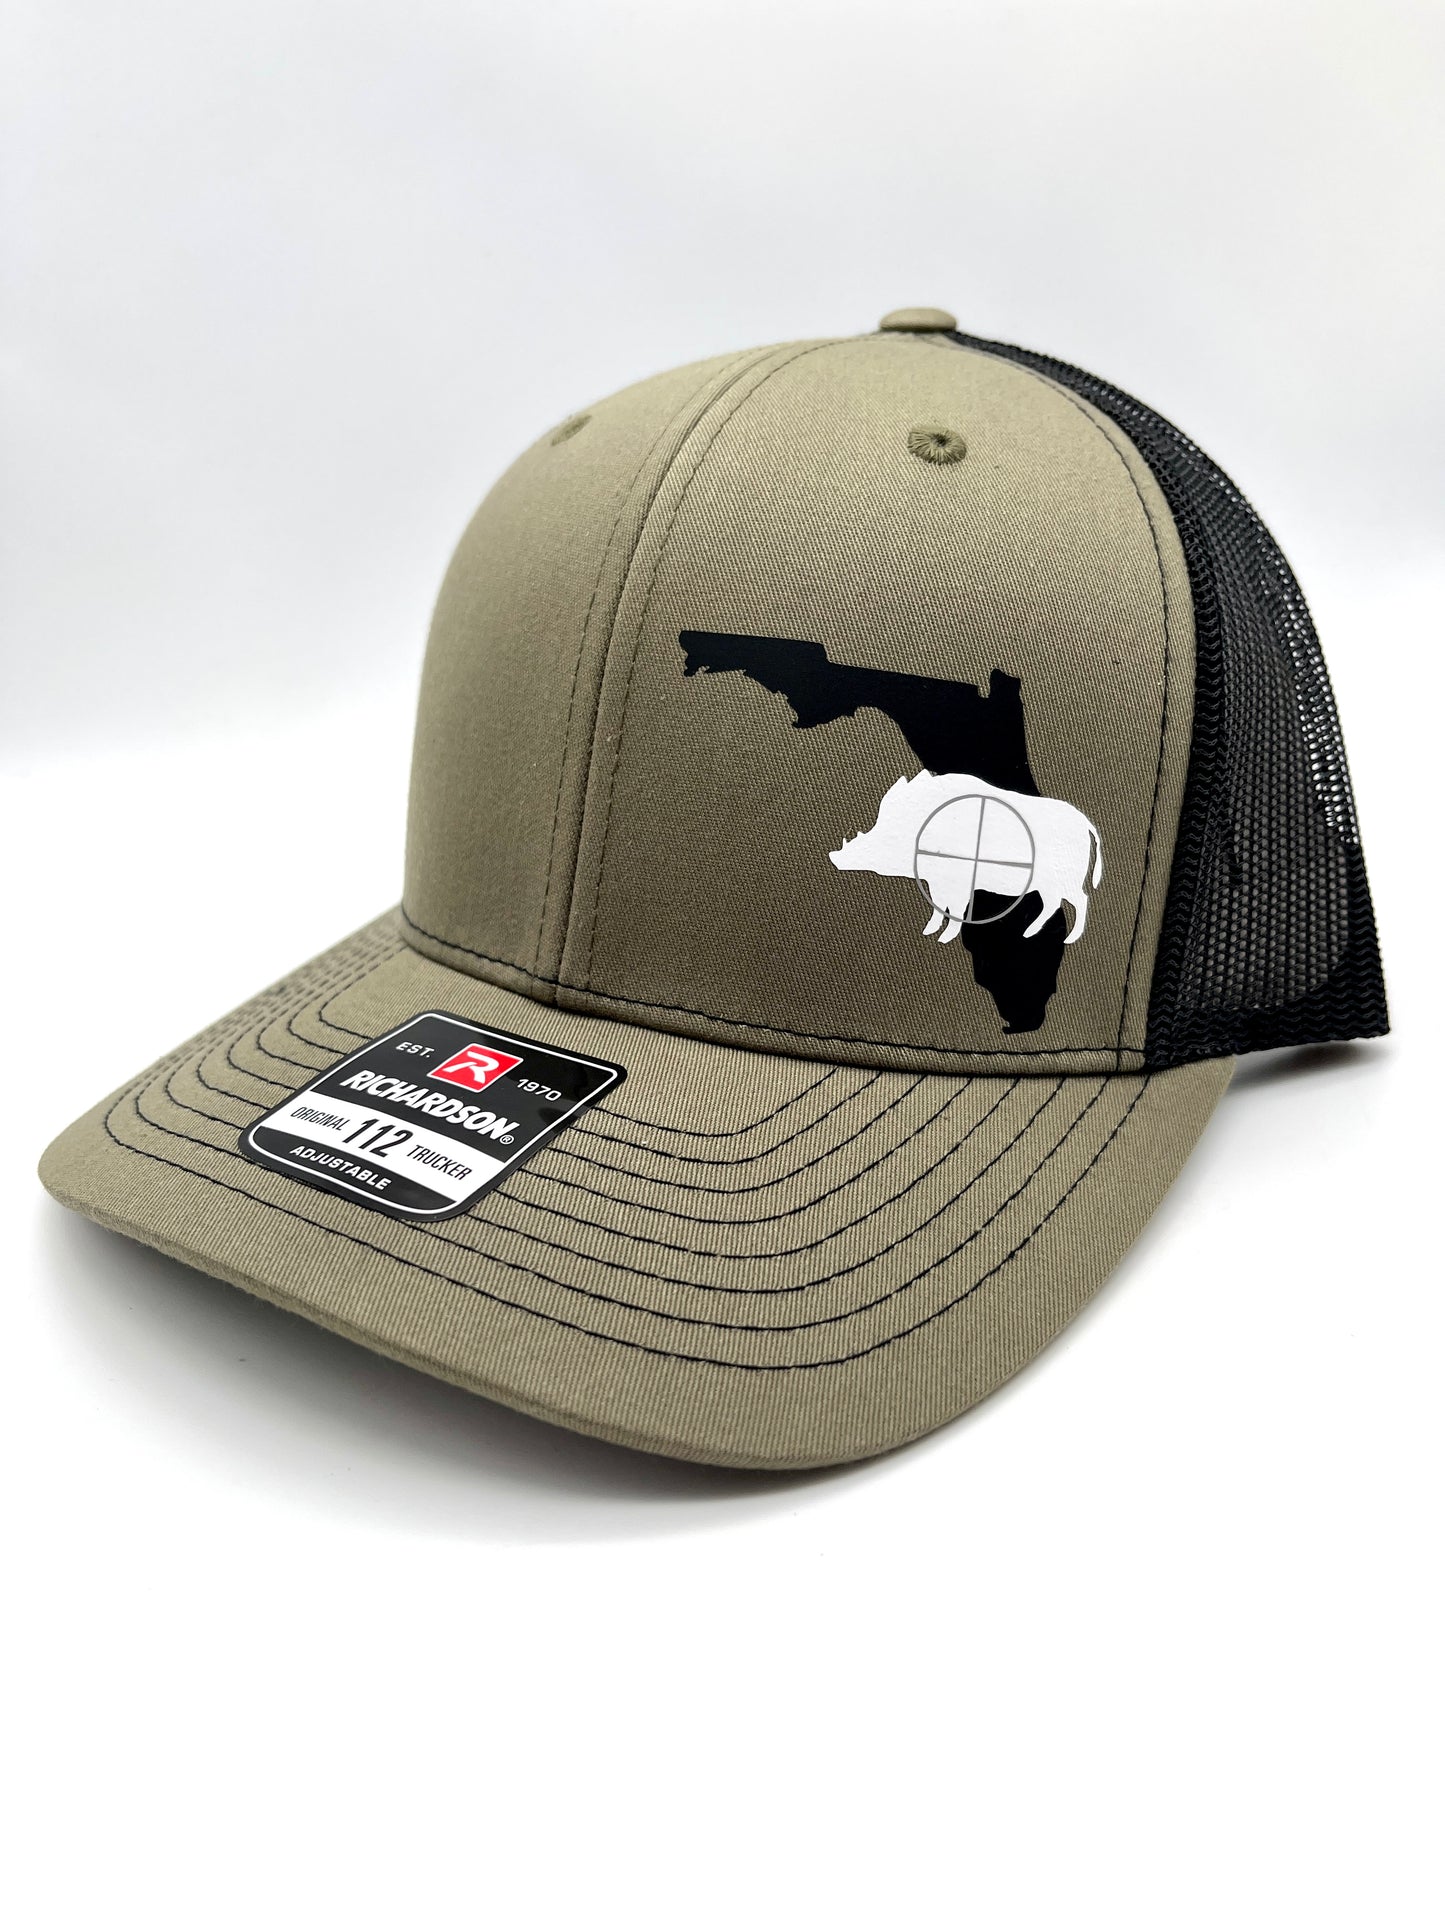 Any State Hog Hunting SnapBack Adjustable Hat